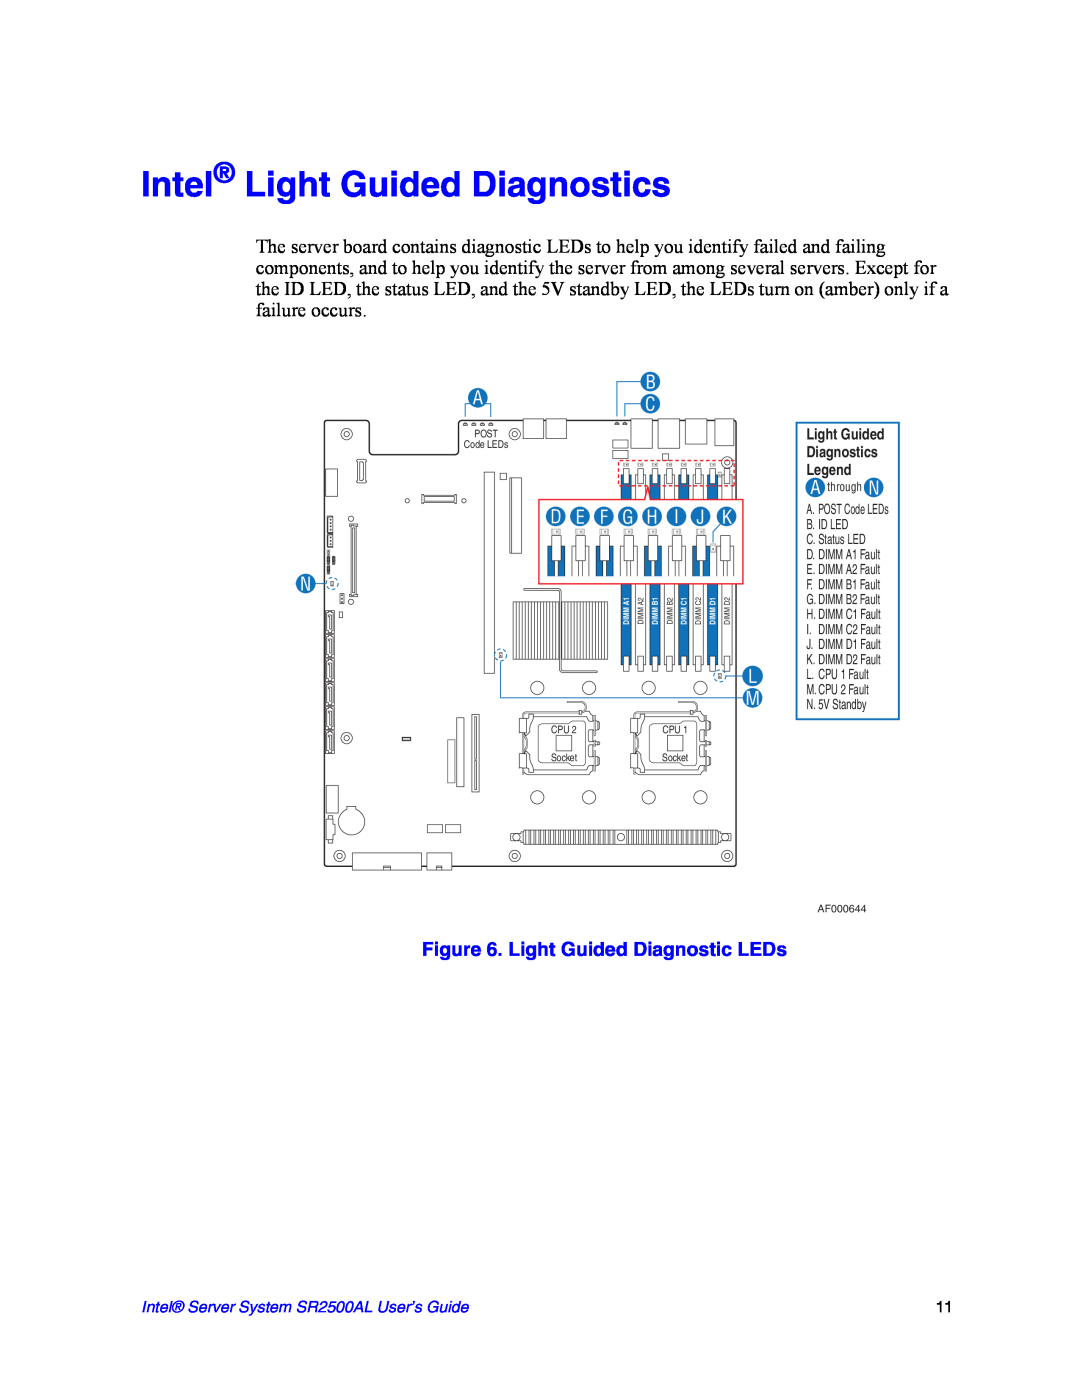 Intel SR2500AL manual Intel Light Guided Diagnostics, Light Guided Diagnostic LEDs 